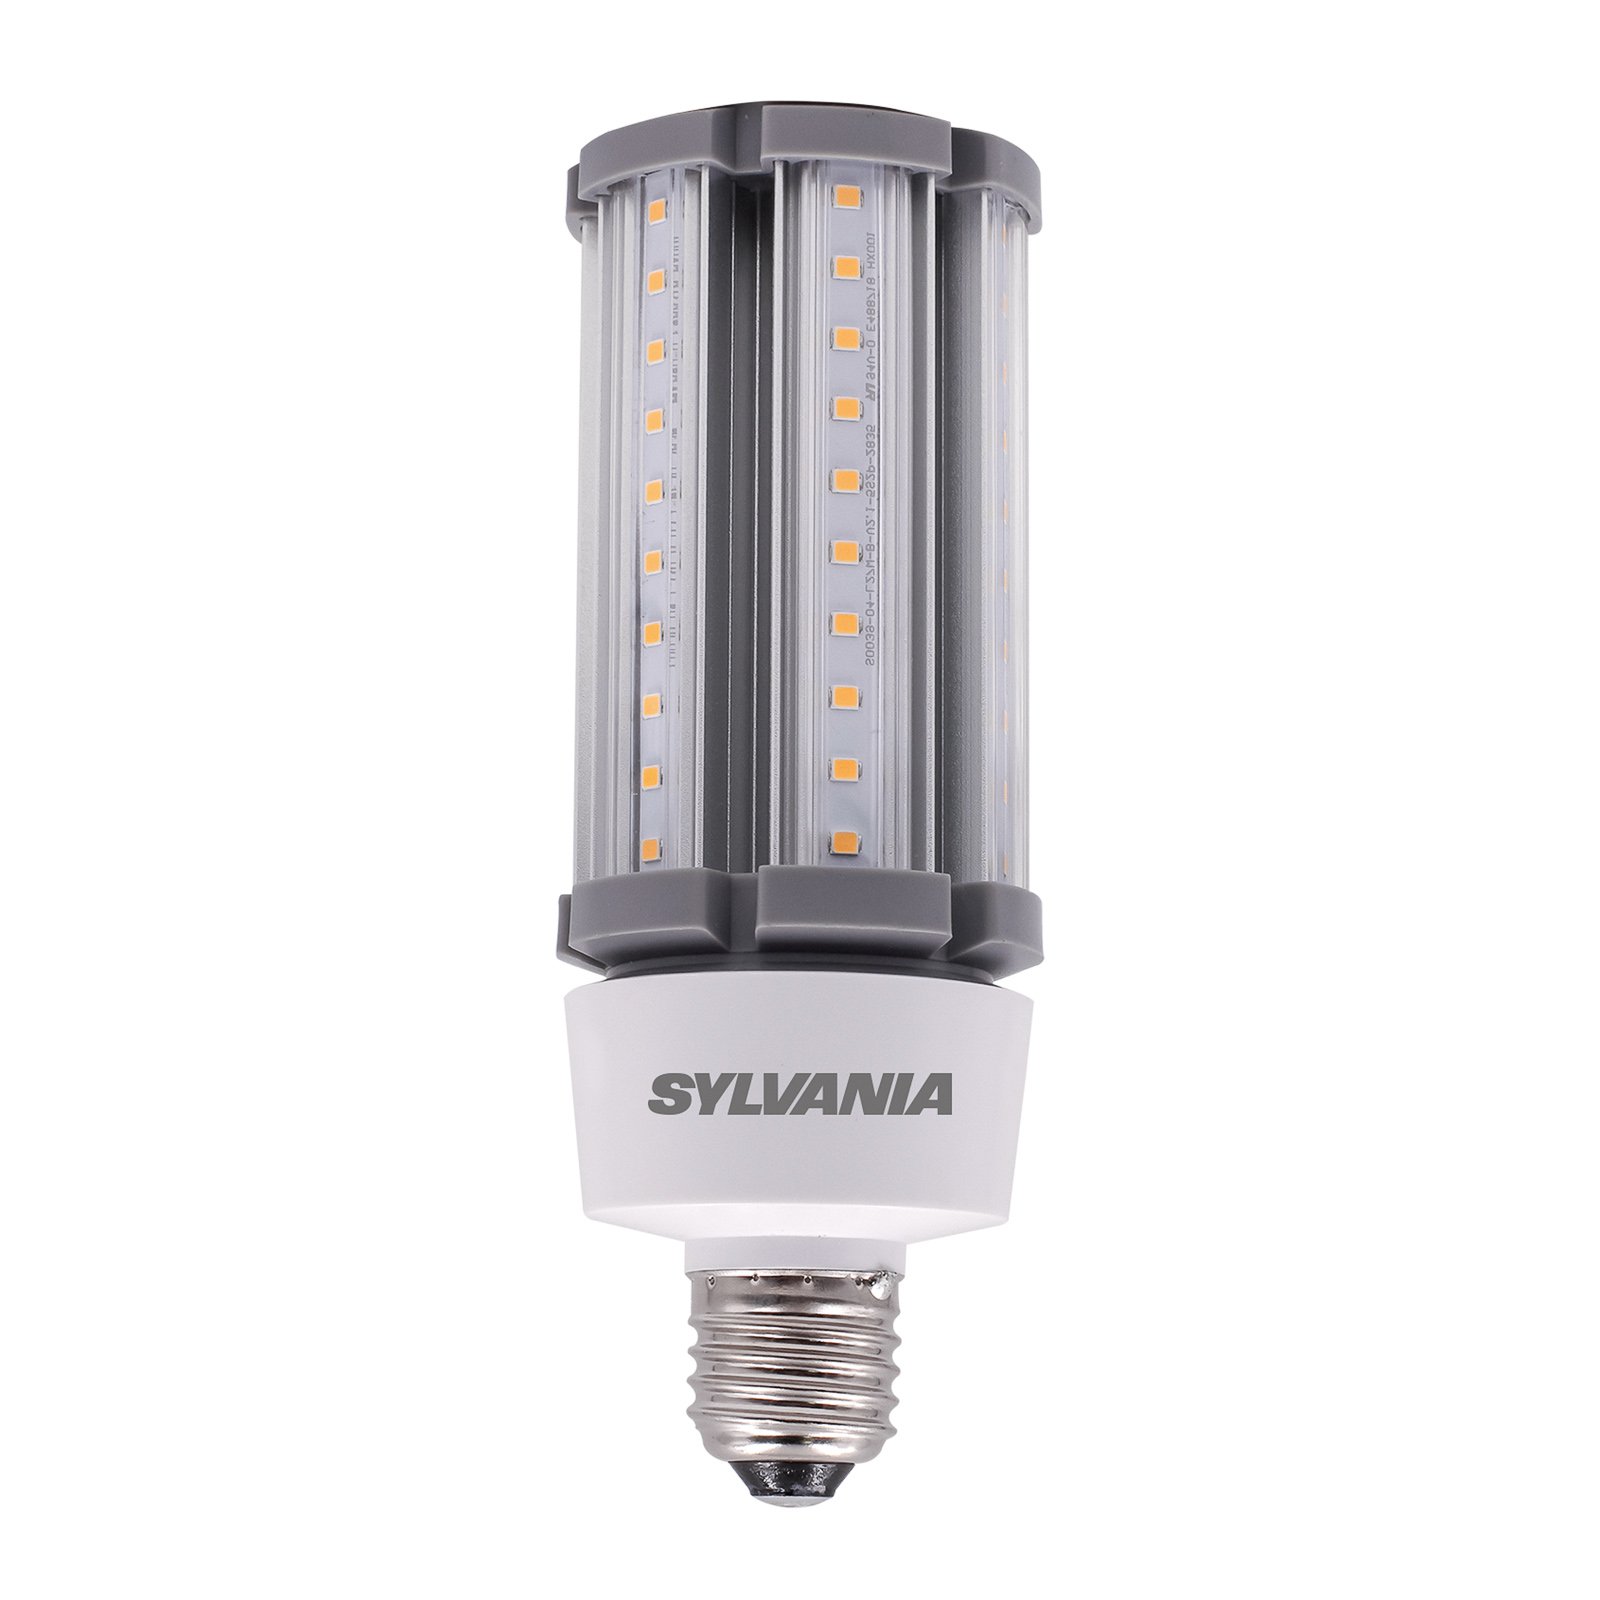 Sylvania LED bulb E27 27 W 4,000 K, 3400 lm